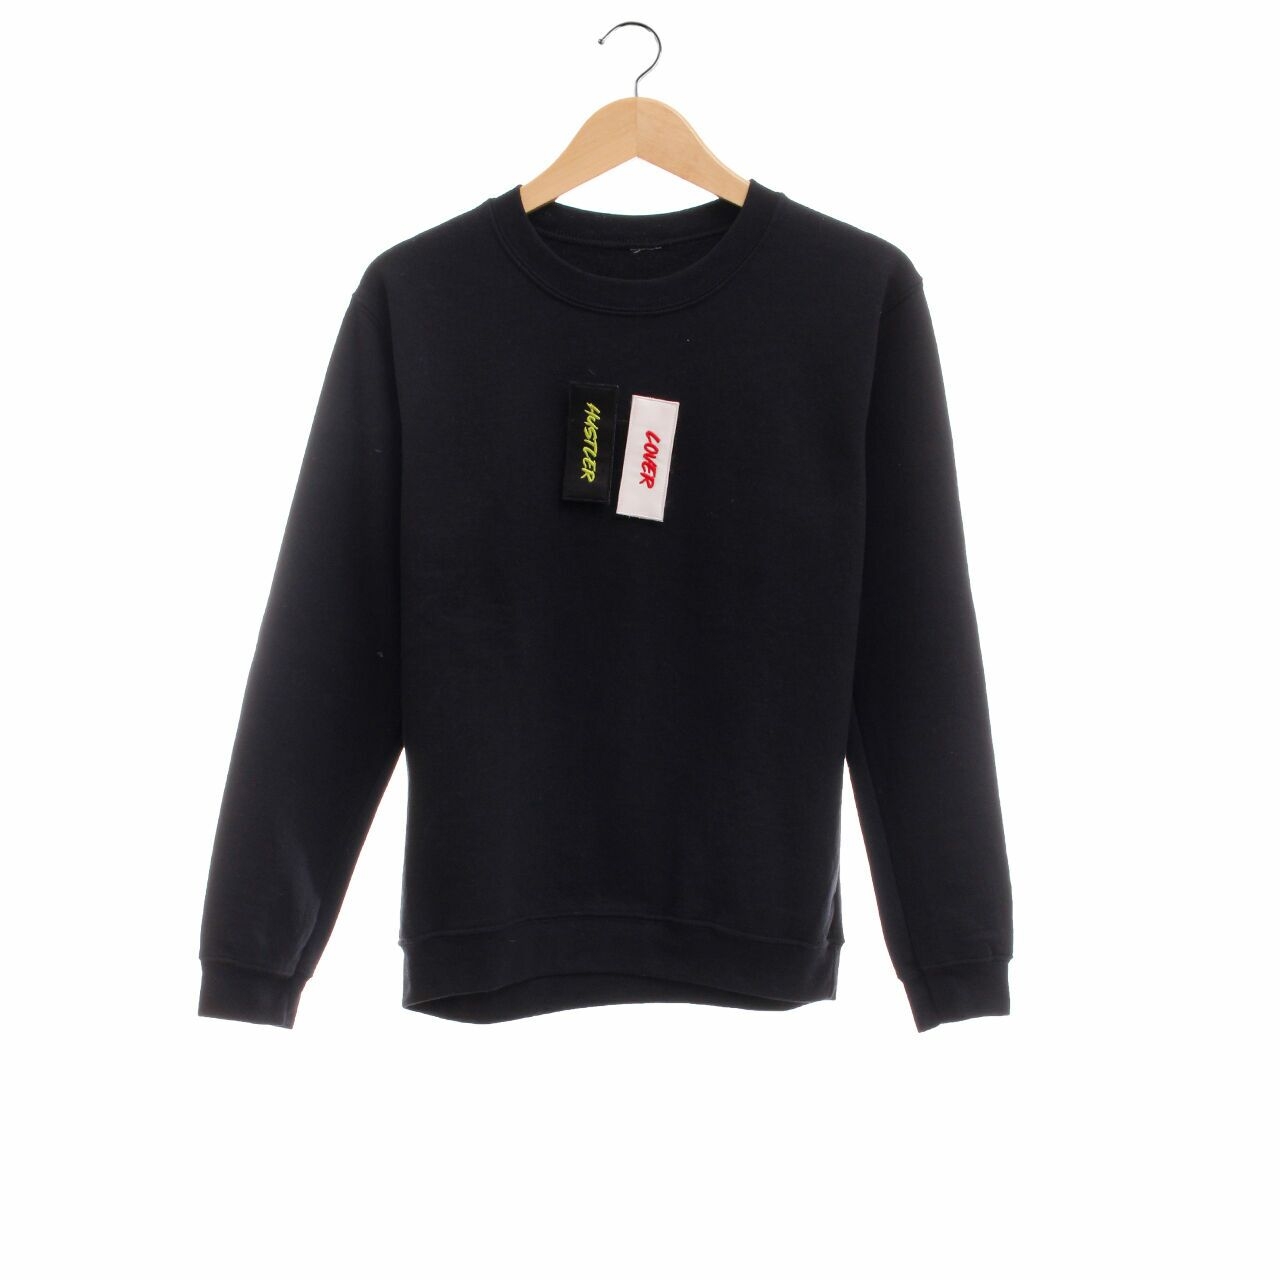 STELLARMADE Black Sweater